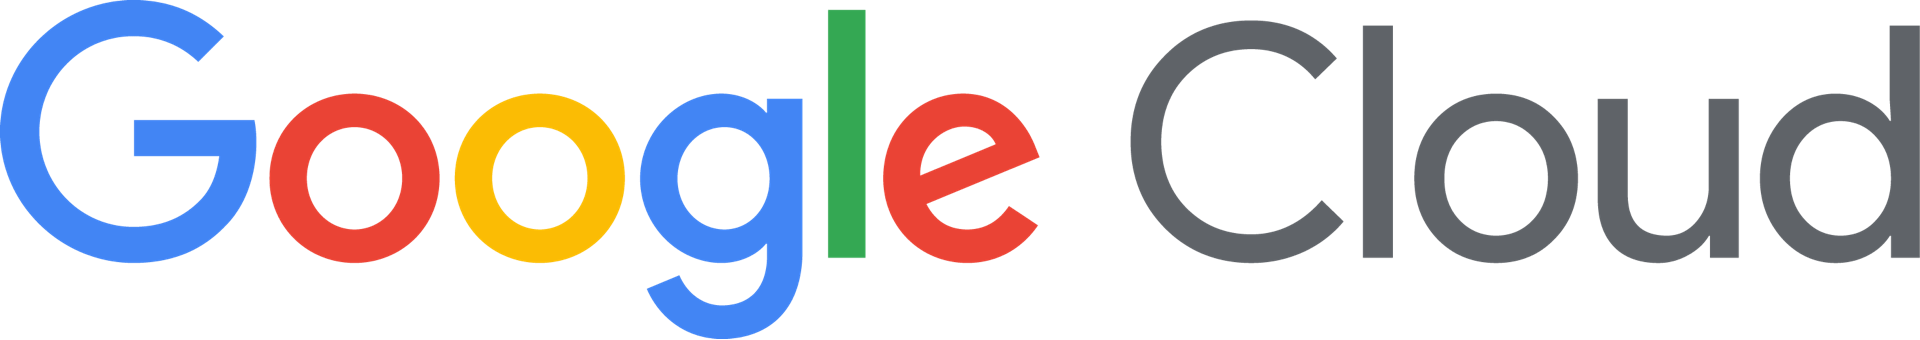 google-cloud-logo (1)